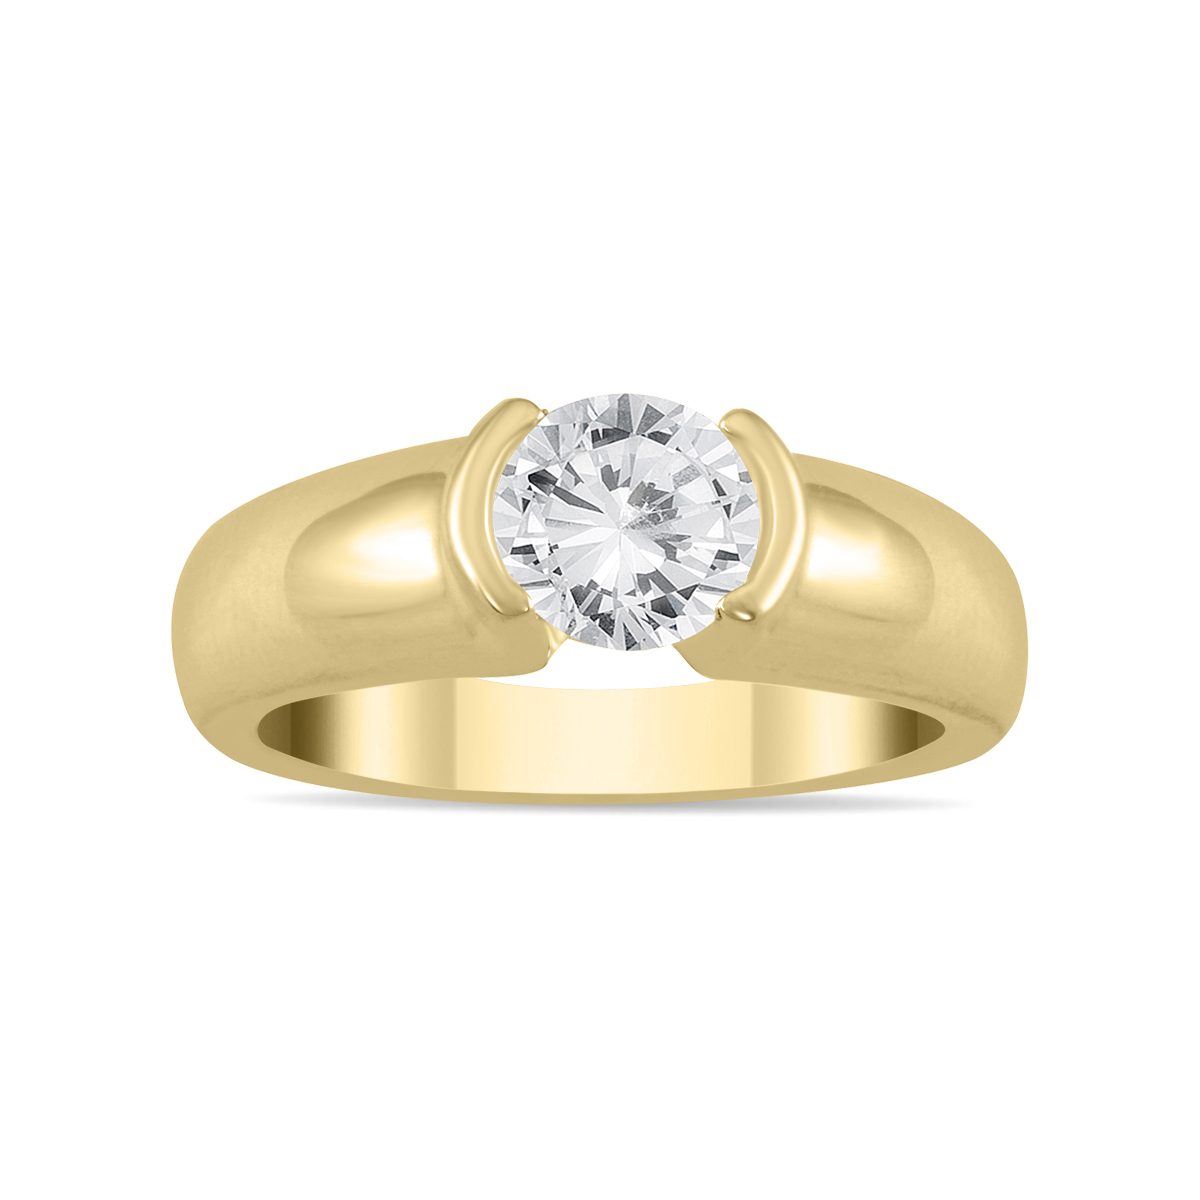 szul.com AGS Certified 3/4 Carat Half Bezel Diamond Solitaire Ring in 14K Yellow Gold (H-I Color, I1-I2 Clari